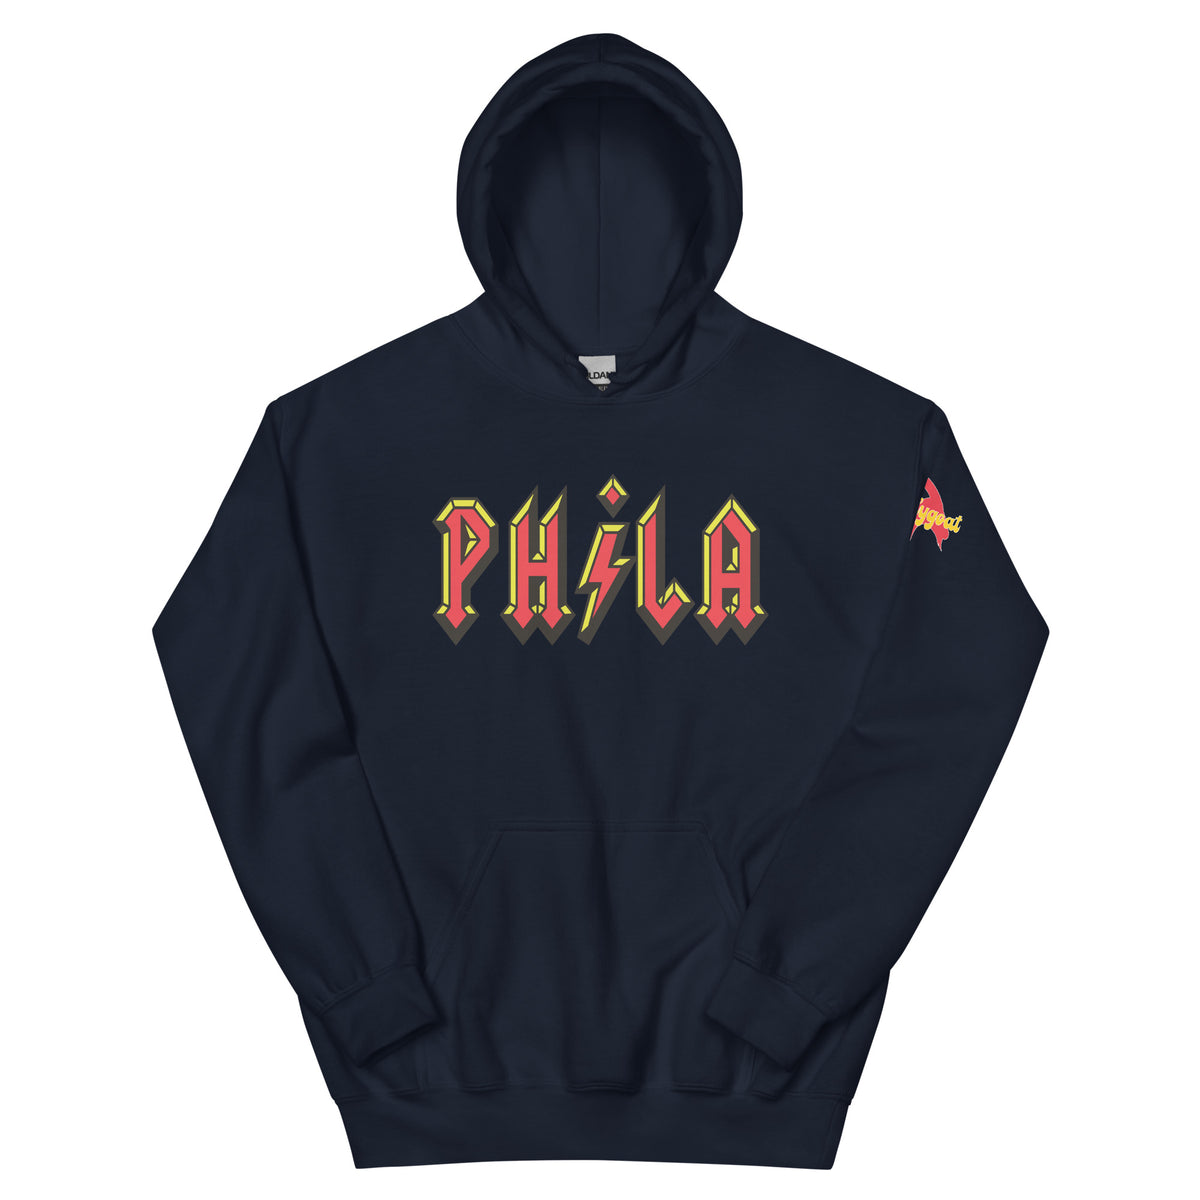 Philadelphia Phila ACDC High Voltage navy blue hoodie Phillygoat